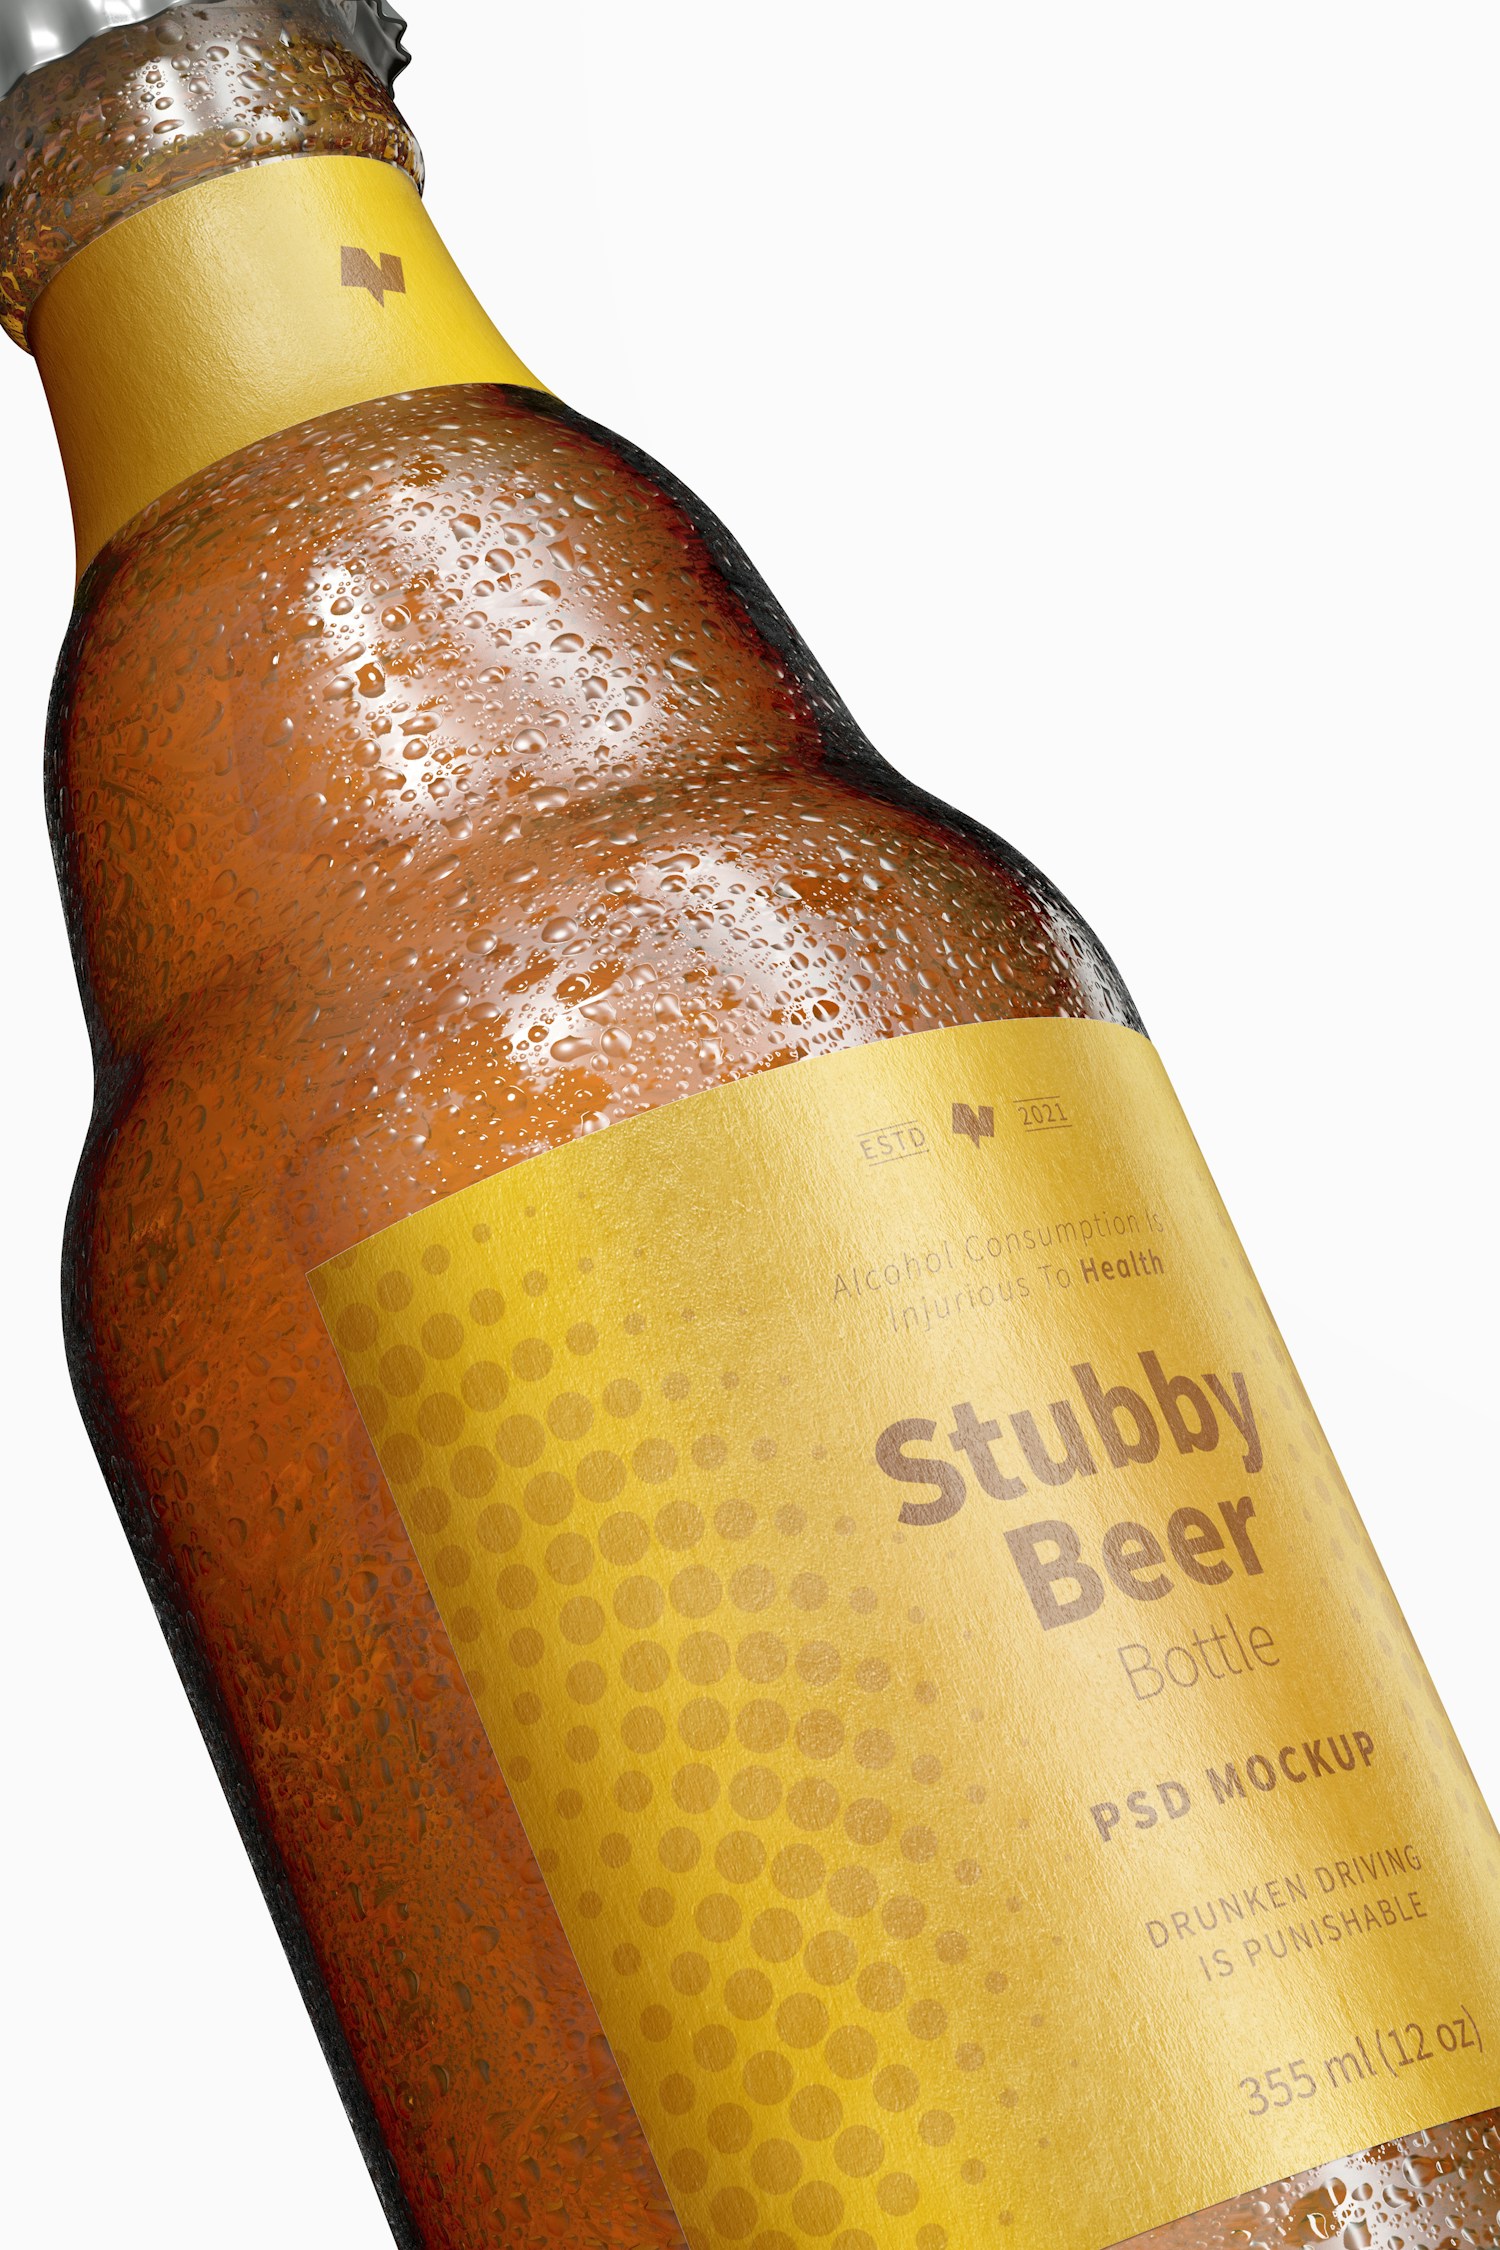 Stubby Beer Bottle Mockup, Close Up